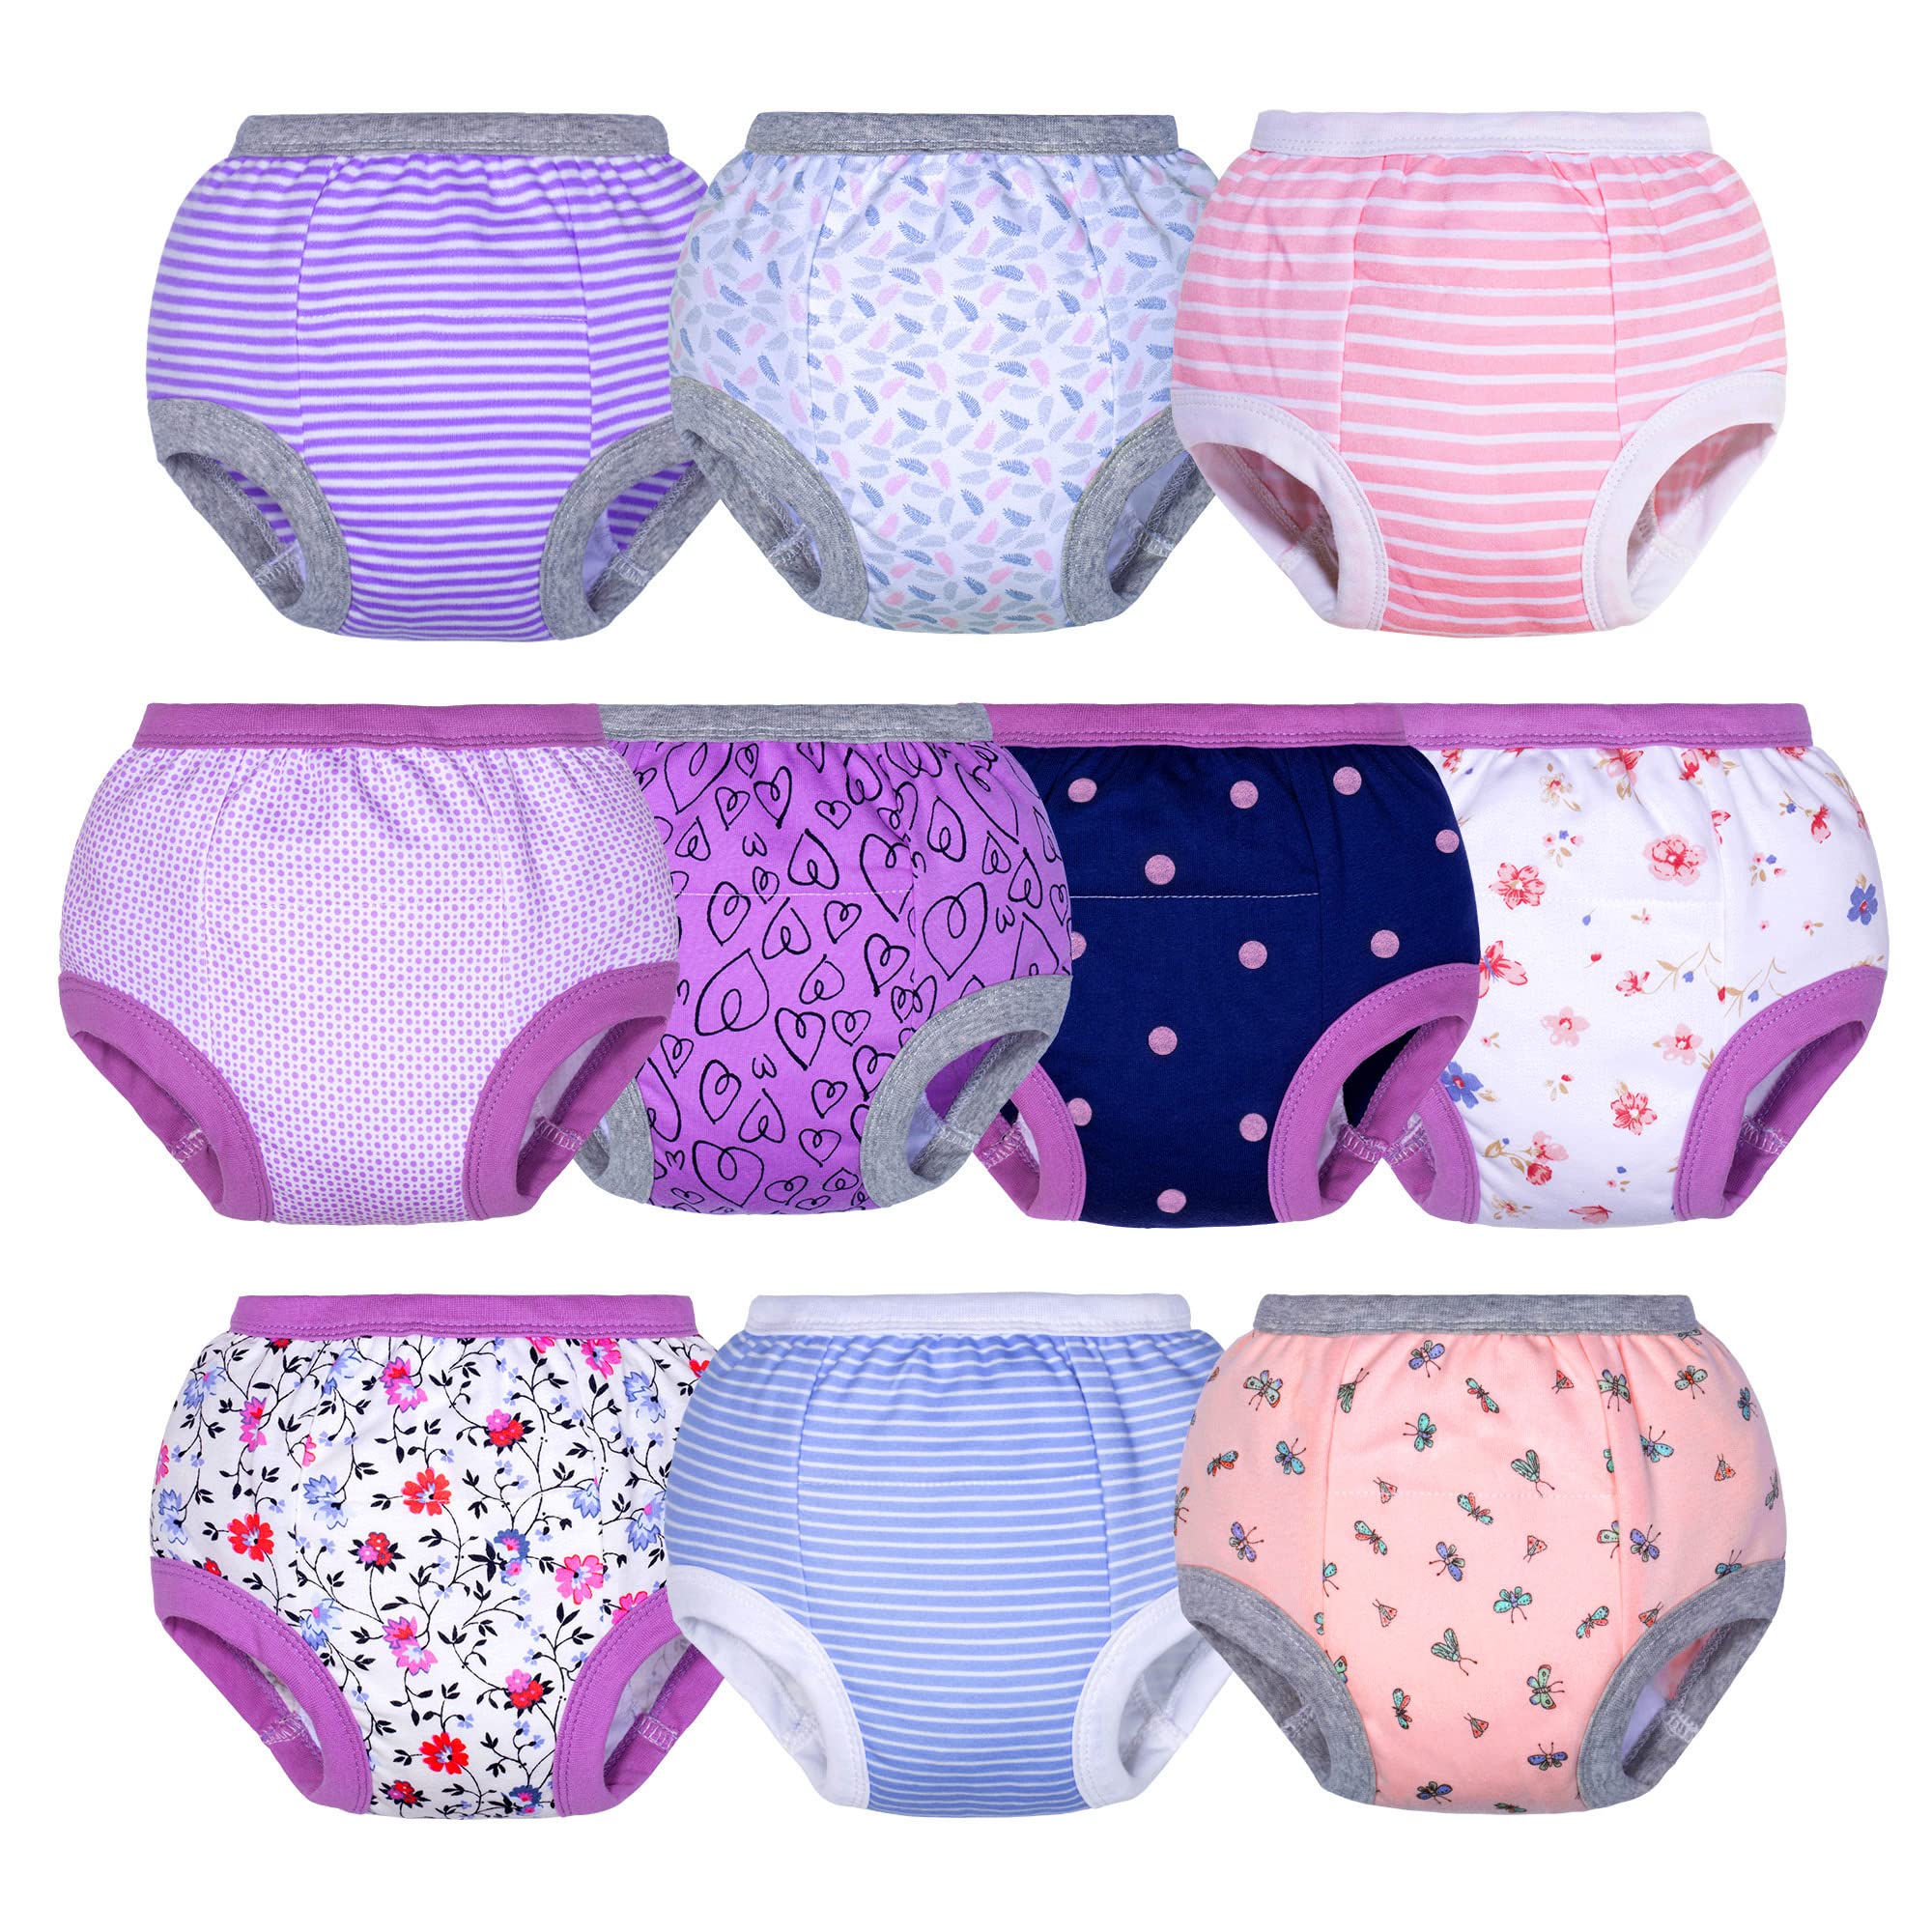 BIG ELEPHANT Toddler Potty Training Pants- 100% Cotton Unisex Baby Pee  Underpants 10-pack, 12M-4T Floral Series 3T